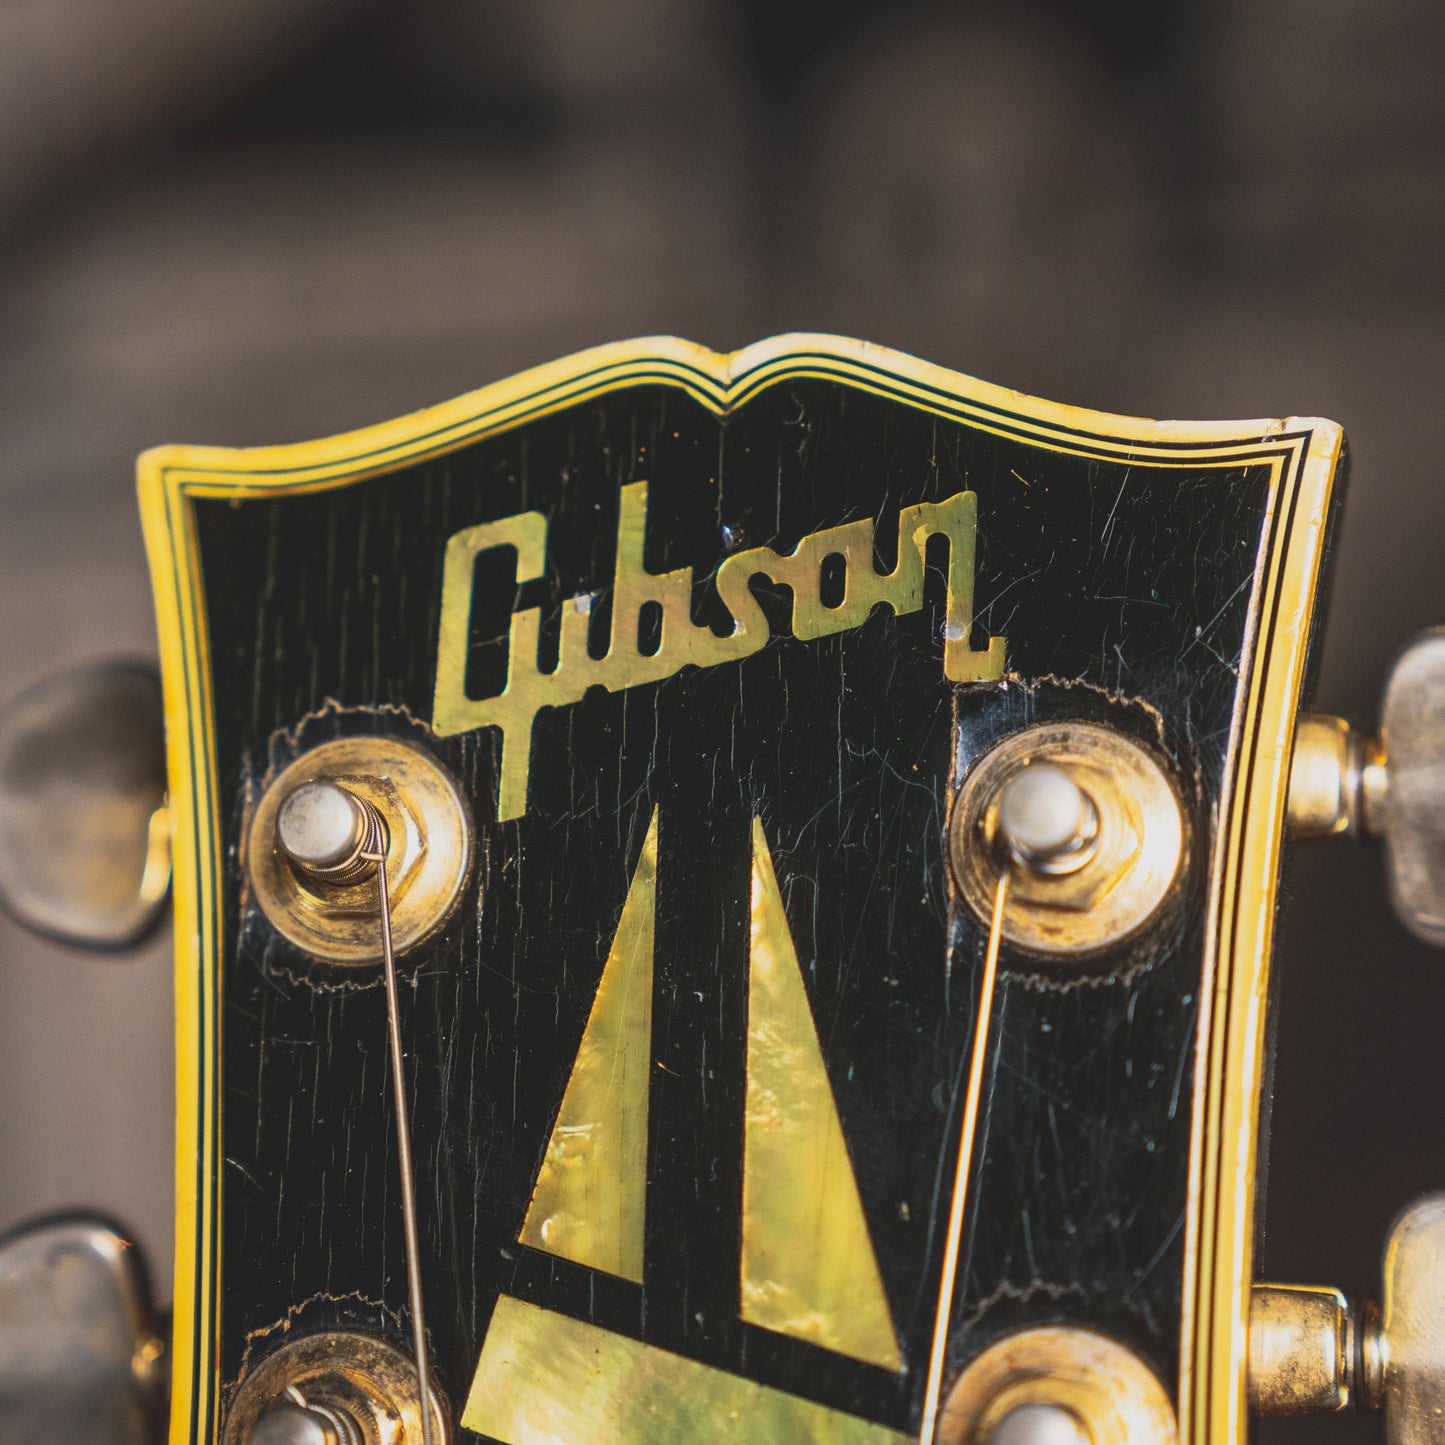 1970 Gibson Les Paul Custom Electric Guitar, Ebony w/ OHSC - Used